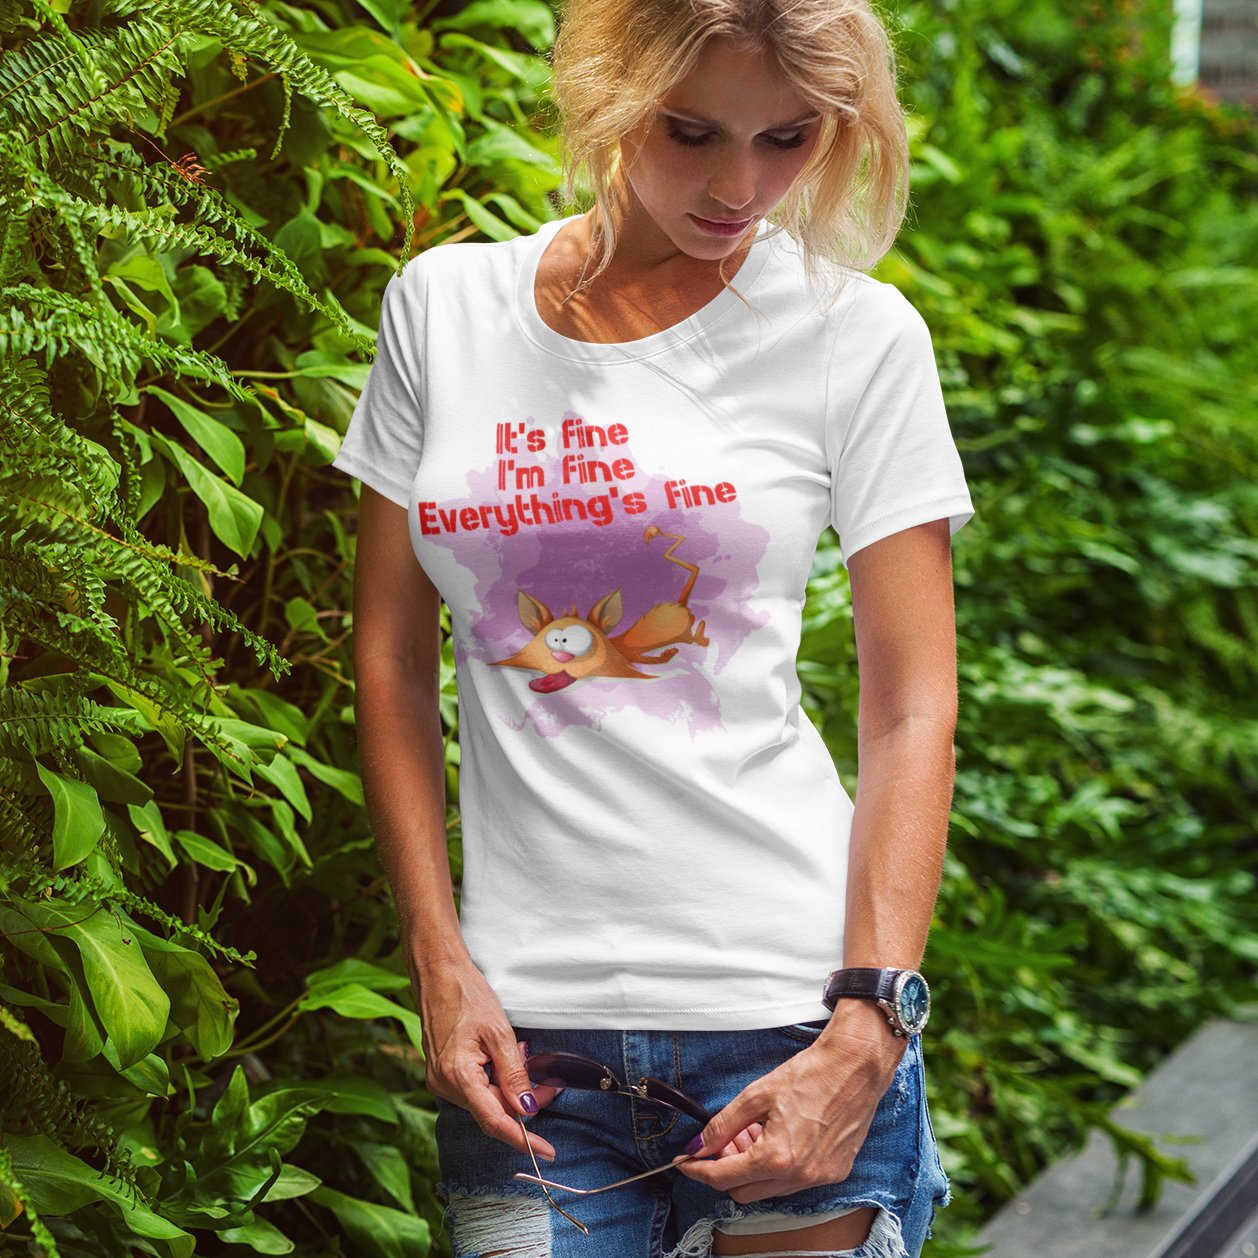 It's Fine, I'm Fine, Everything's Fine: Calm Chaos T-shirt – Where Zen Meets Casual Acceptance!